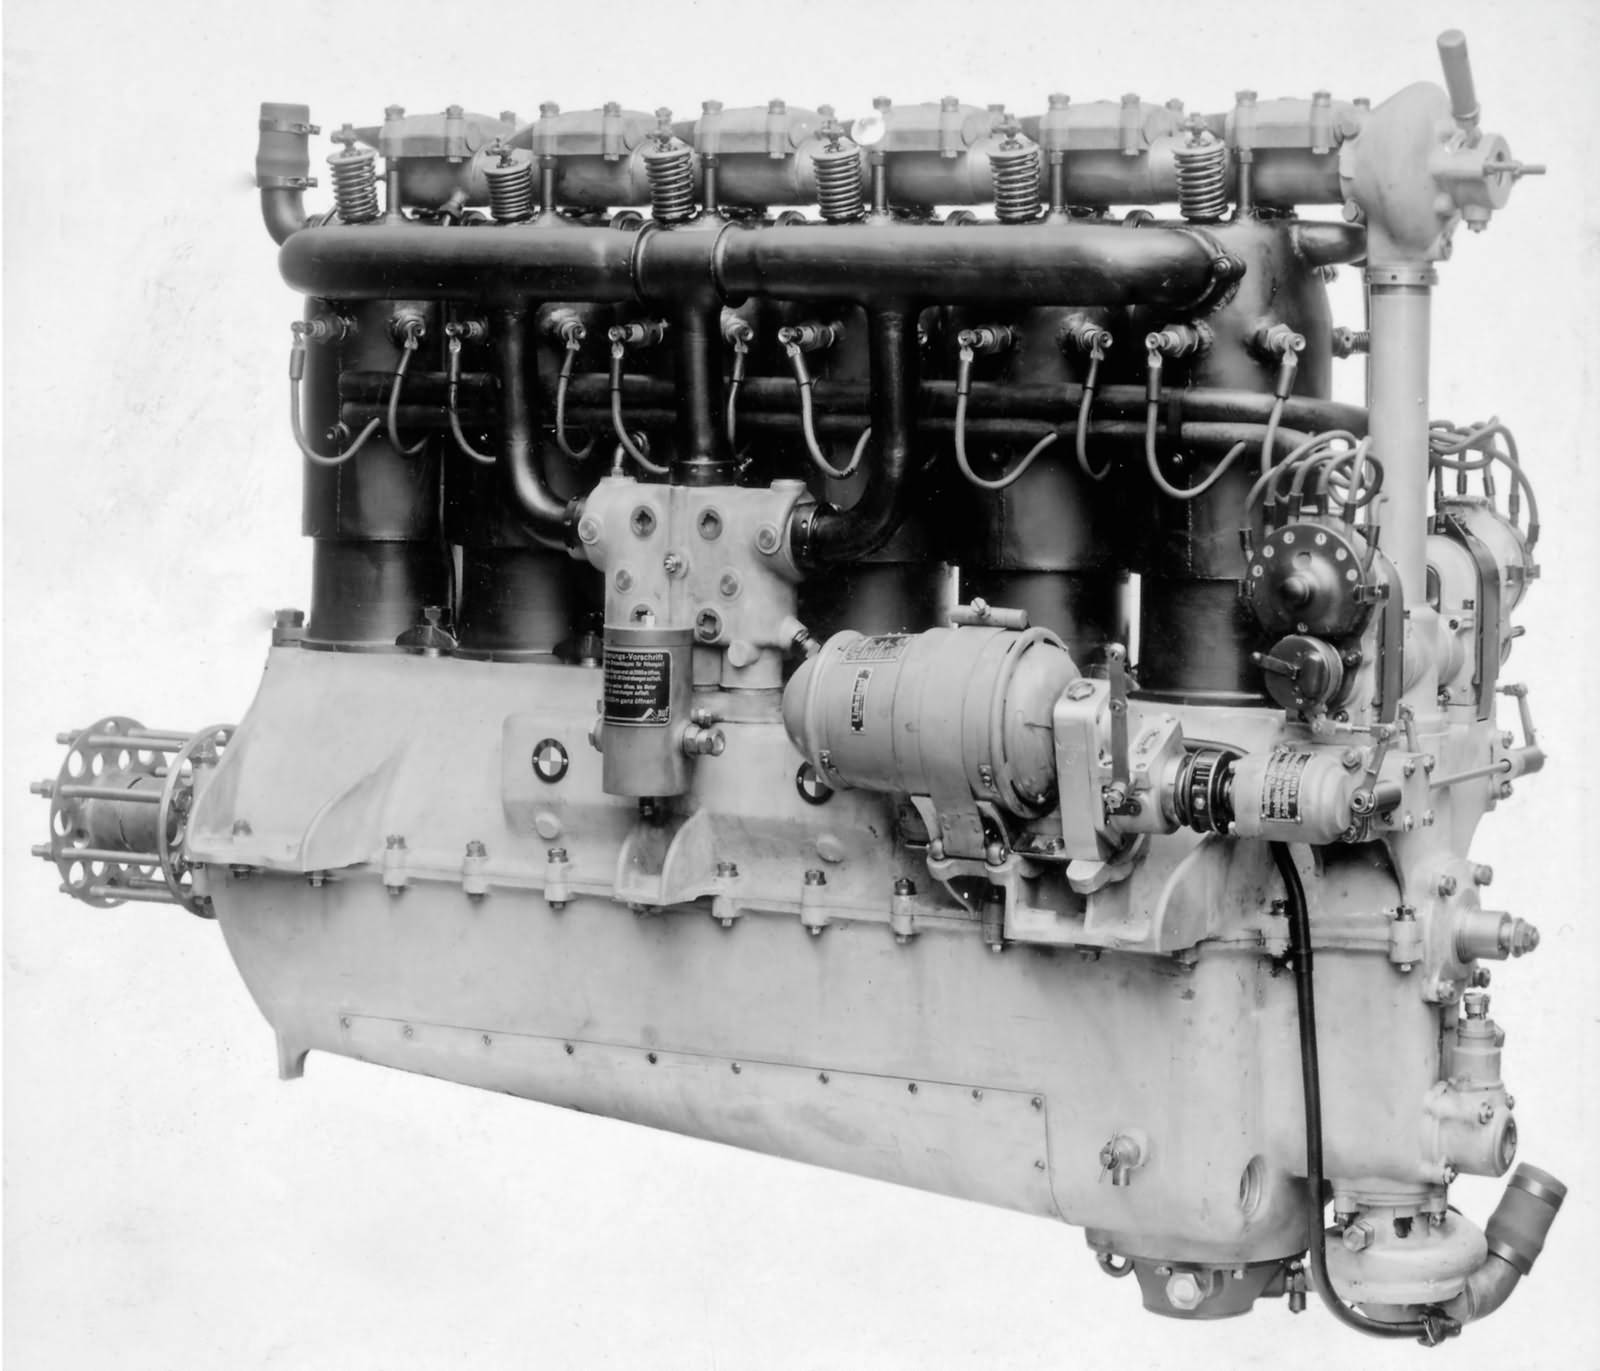 Flugmotor BMW IIIa - erster BMW Motor 1917